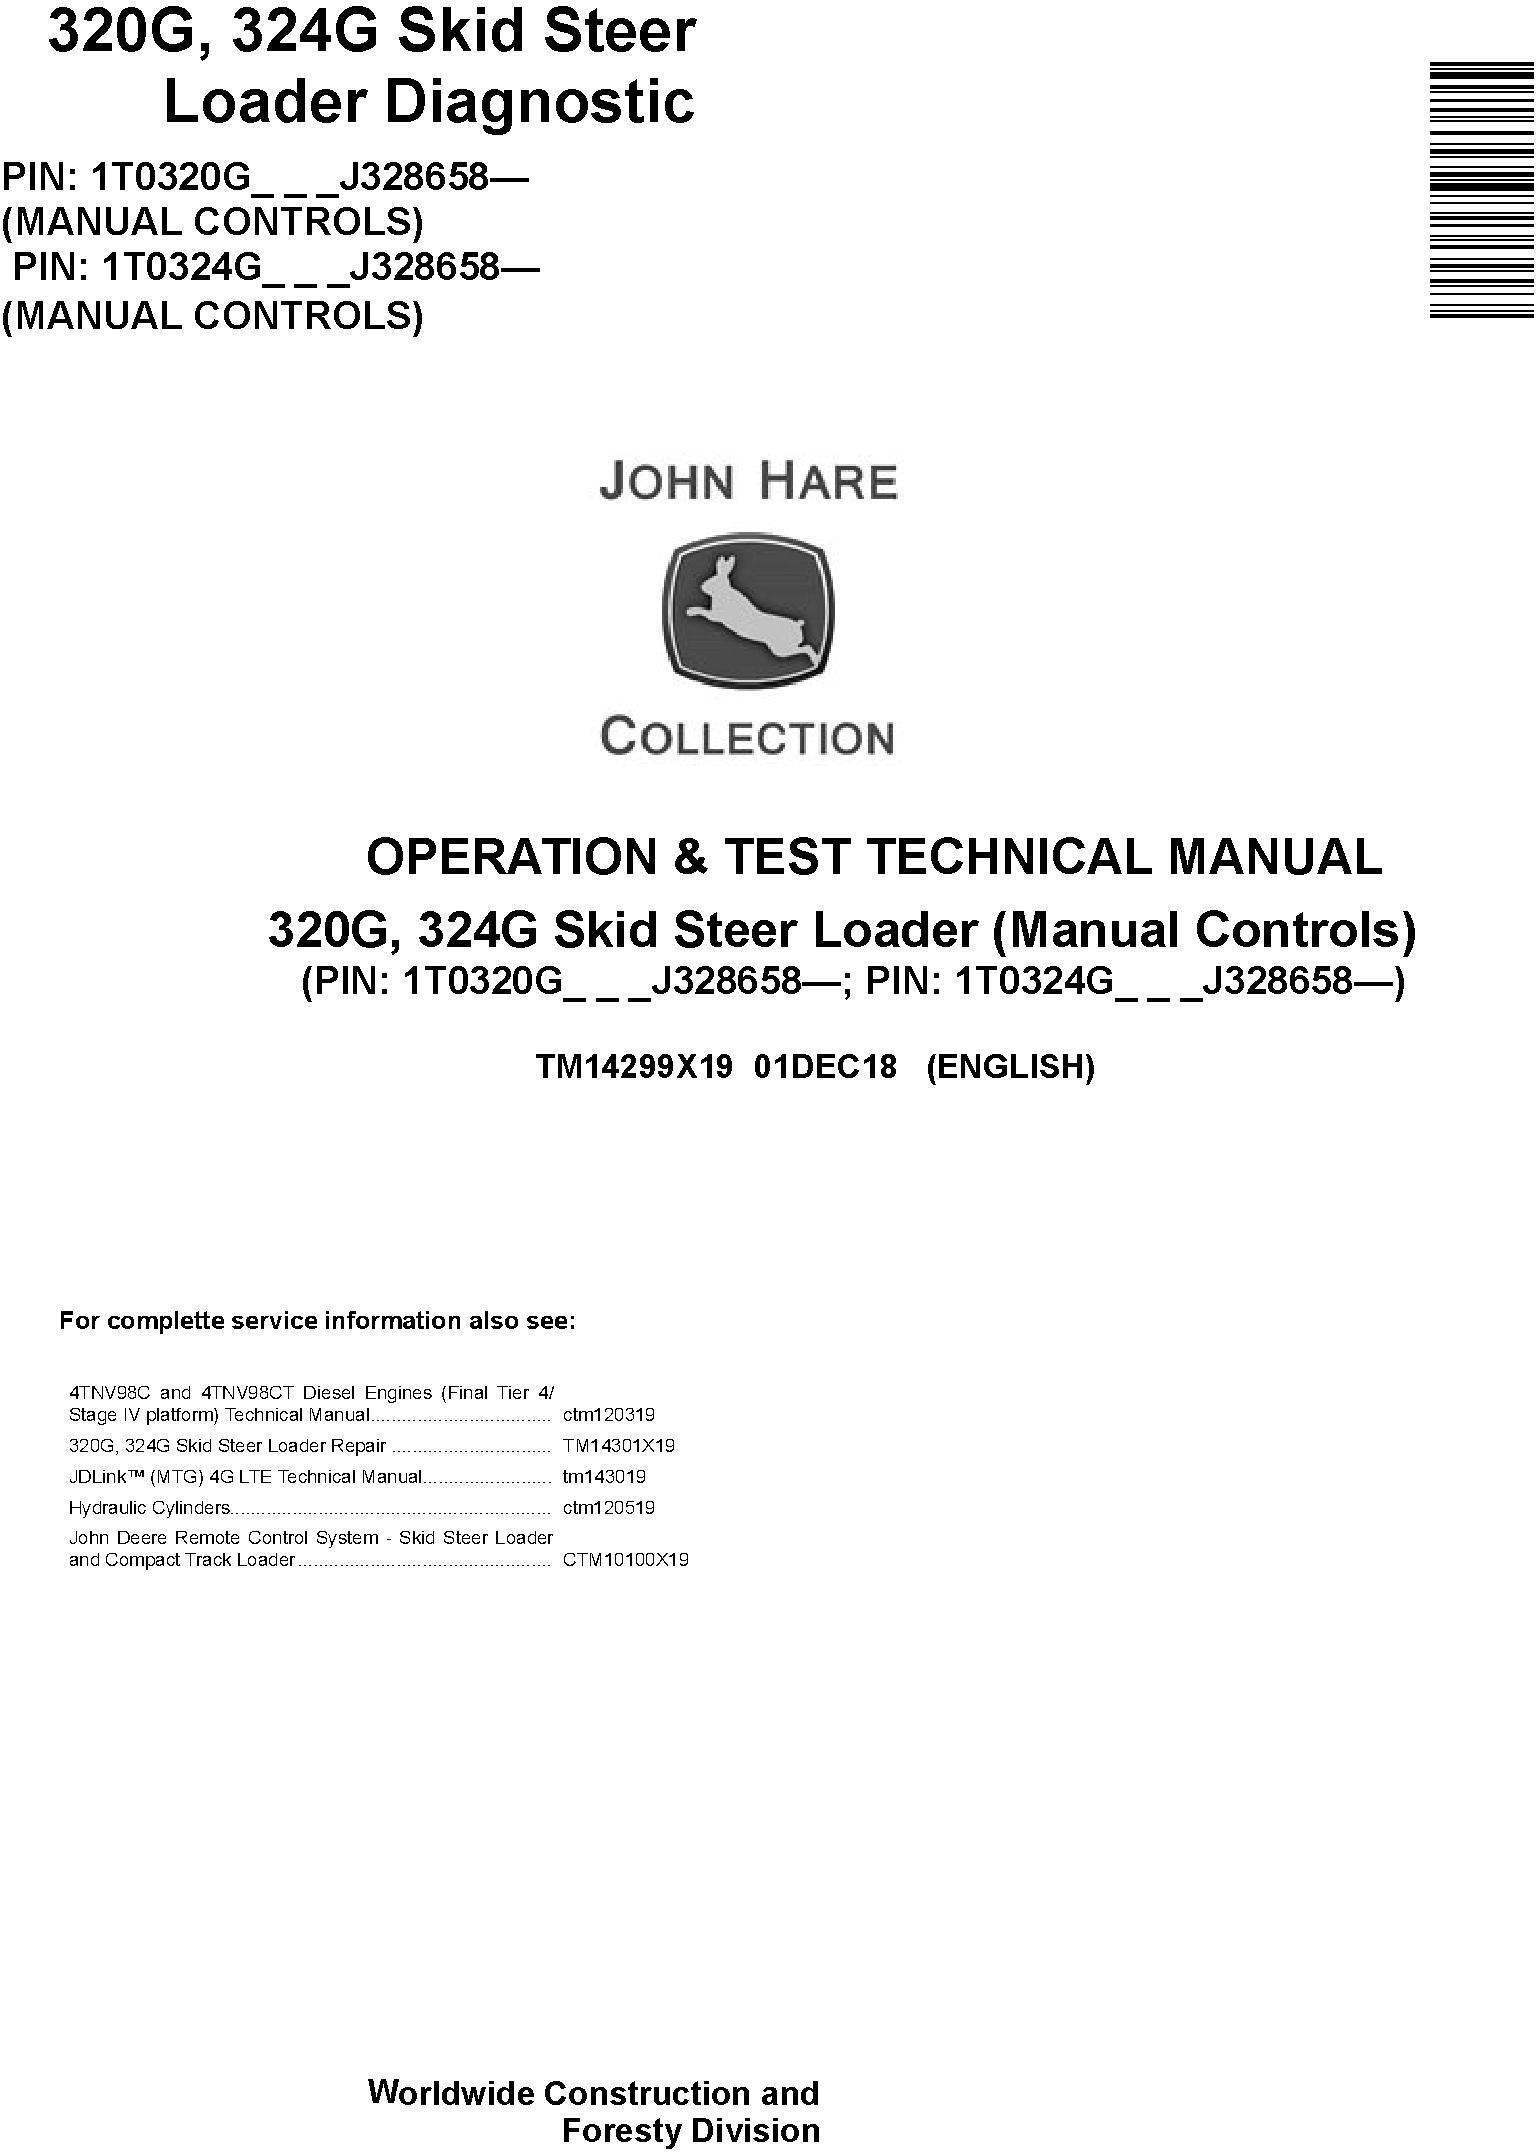 John Deere 320G, 324G Skid Steer Loader w.Manual Controls Operation & Test Service Manual (TM14299X19) - 20101